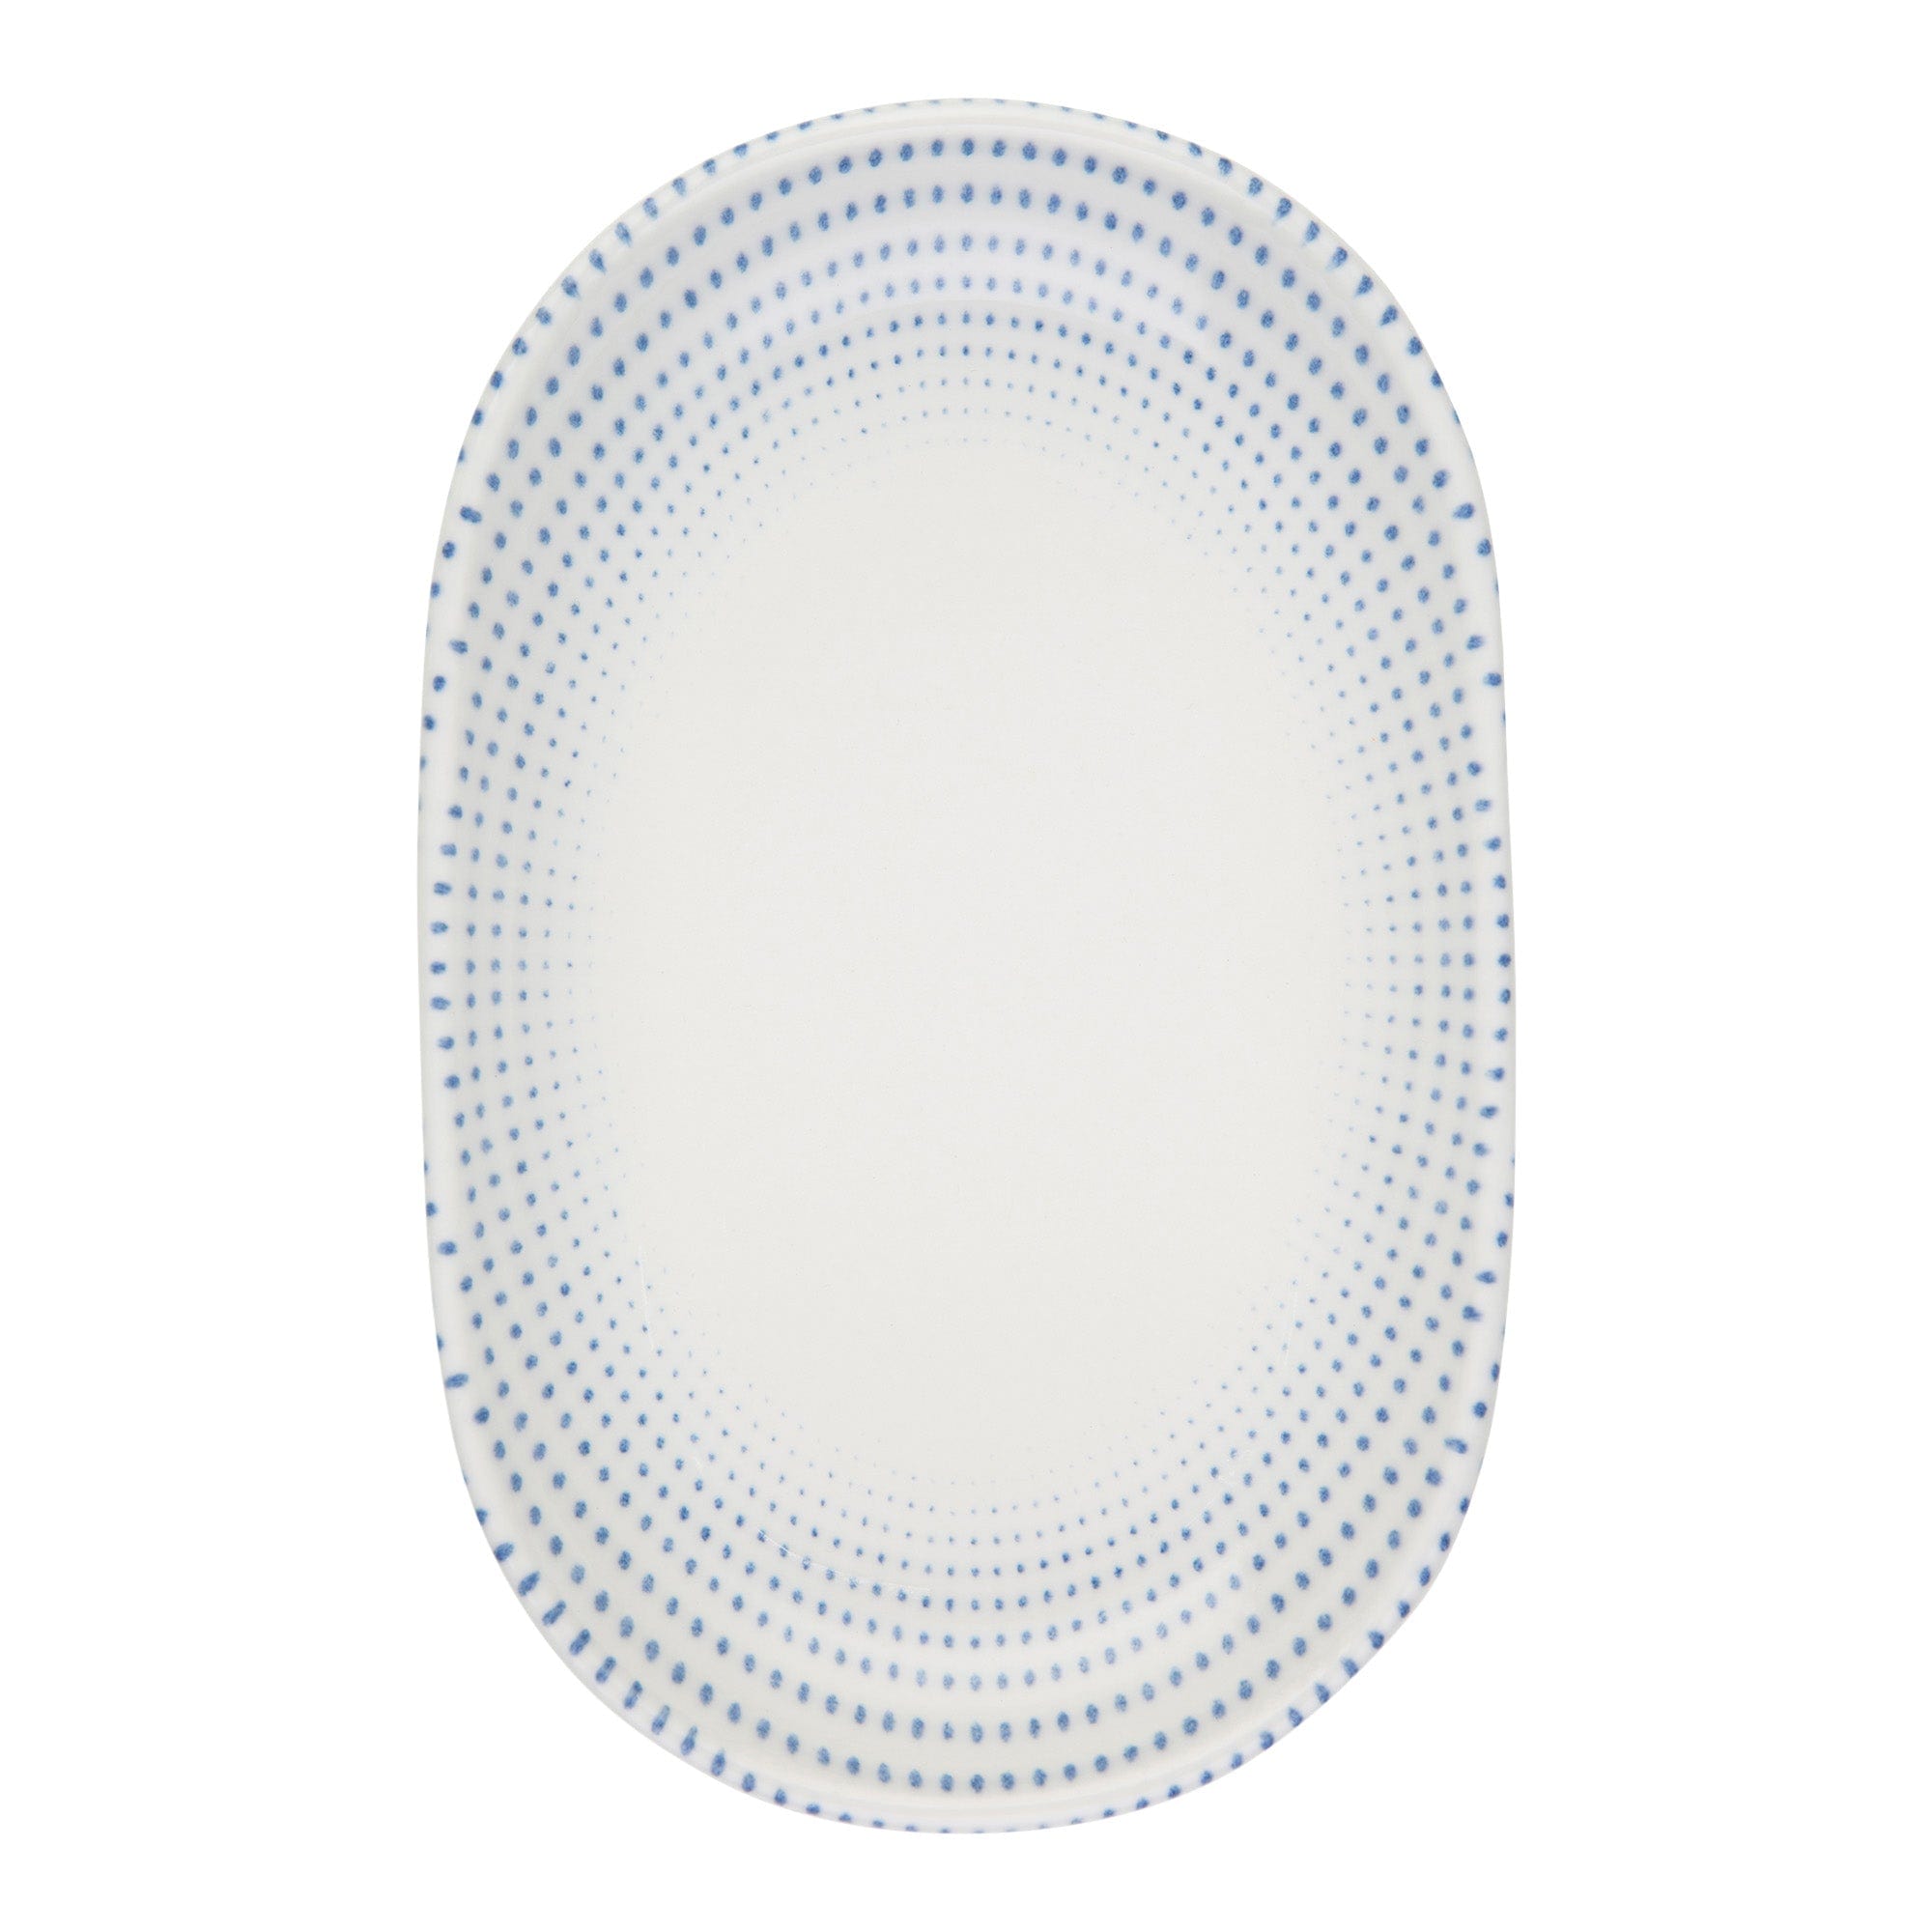 Harmony Blue Porcelain Oval Platter  13.2"x8.4"